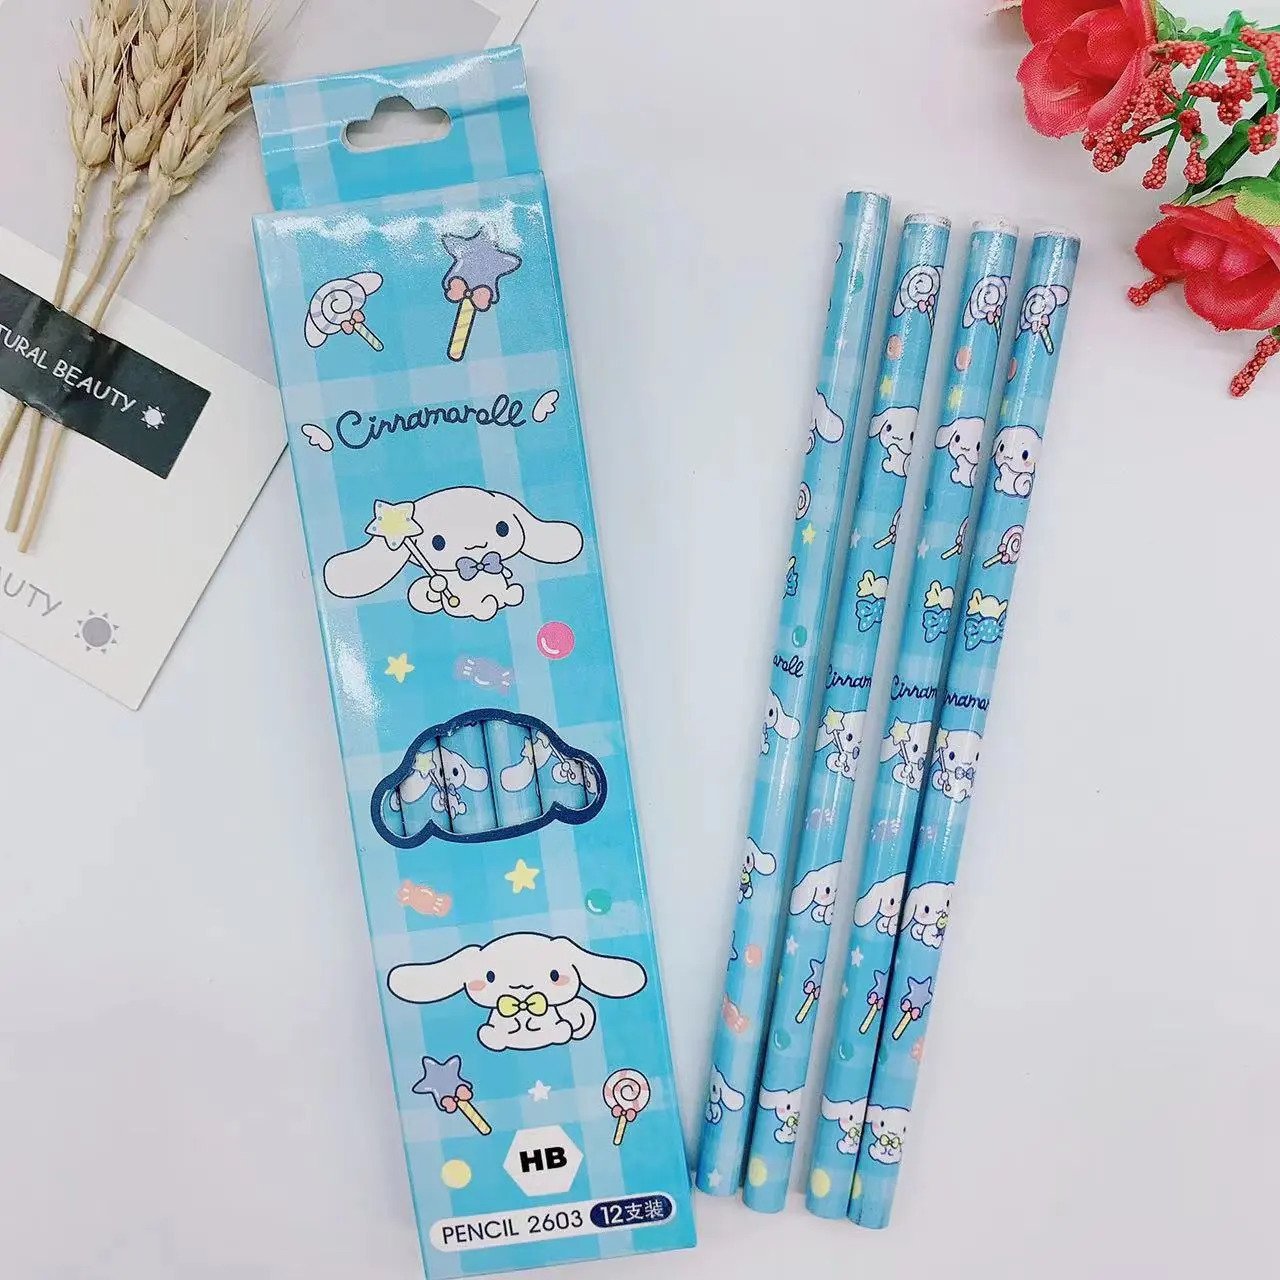 Sanrio Pencil Pack (qty: 12)